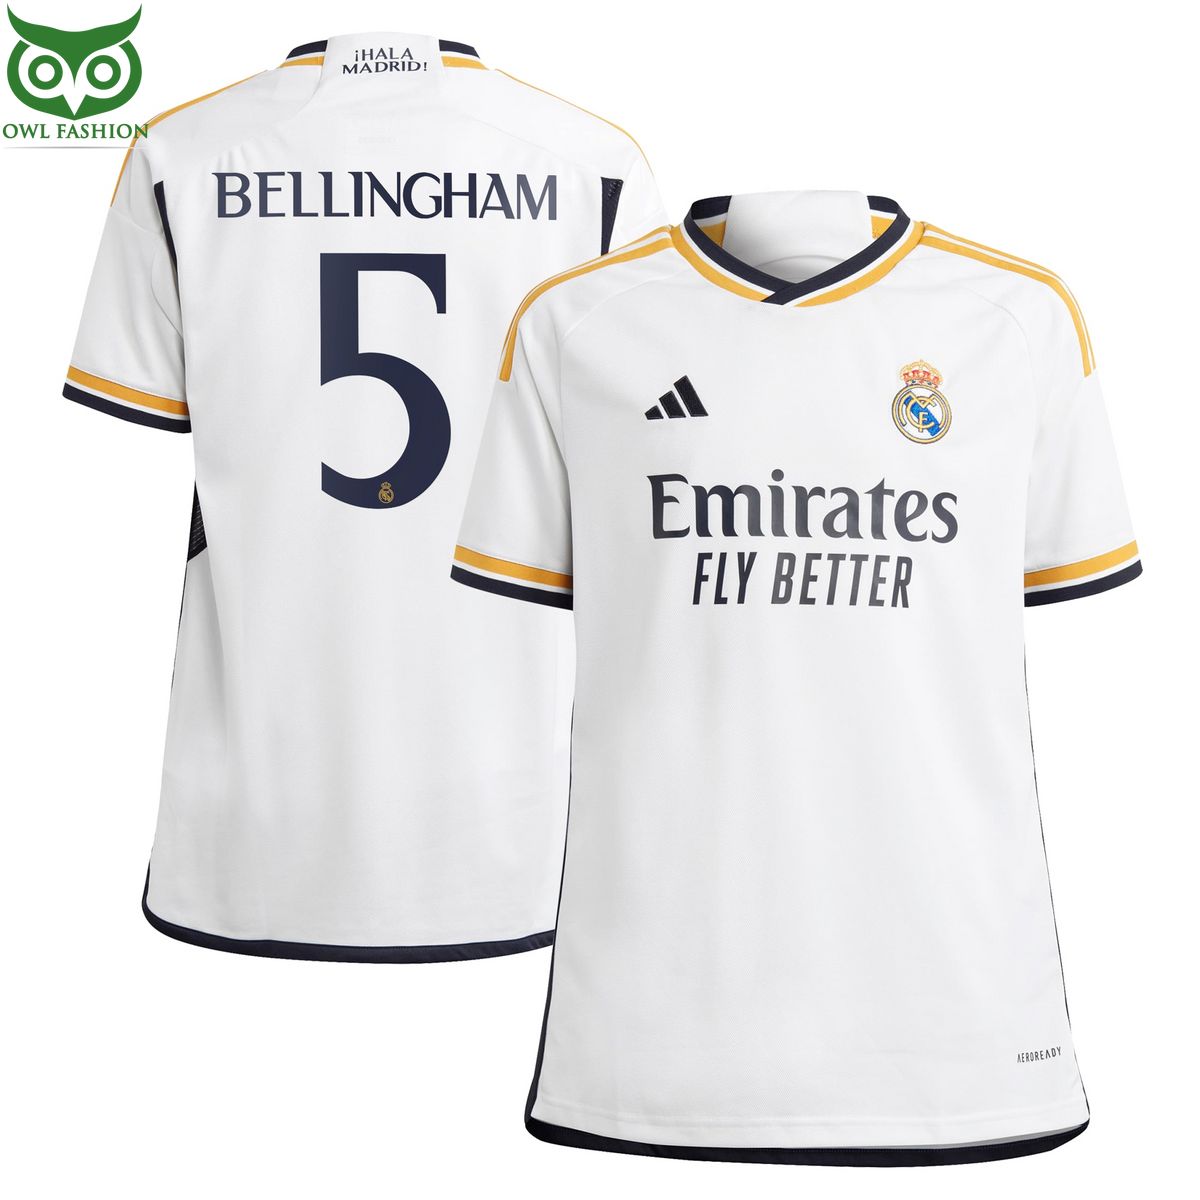 bellingham real madrid football soccer jersey shirt white version shop owl fashion 1 CXQql.jpg